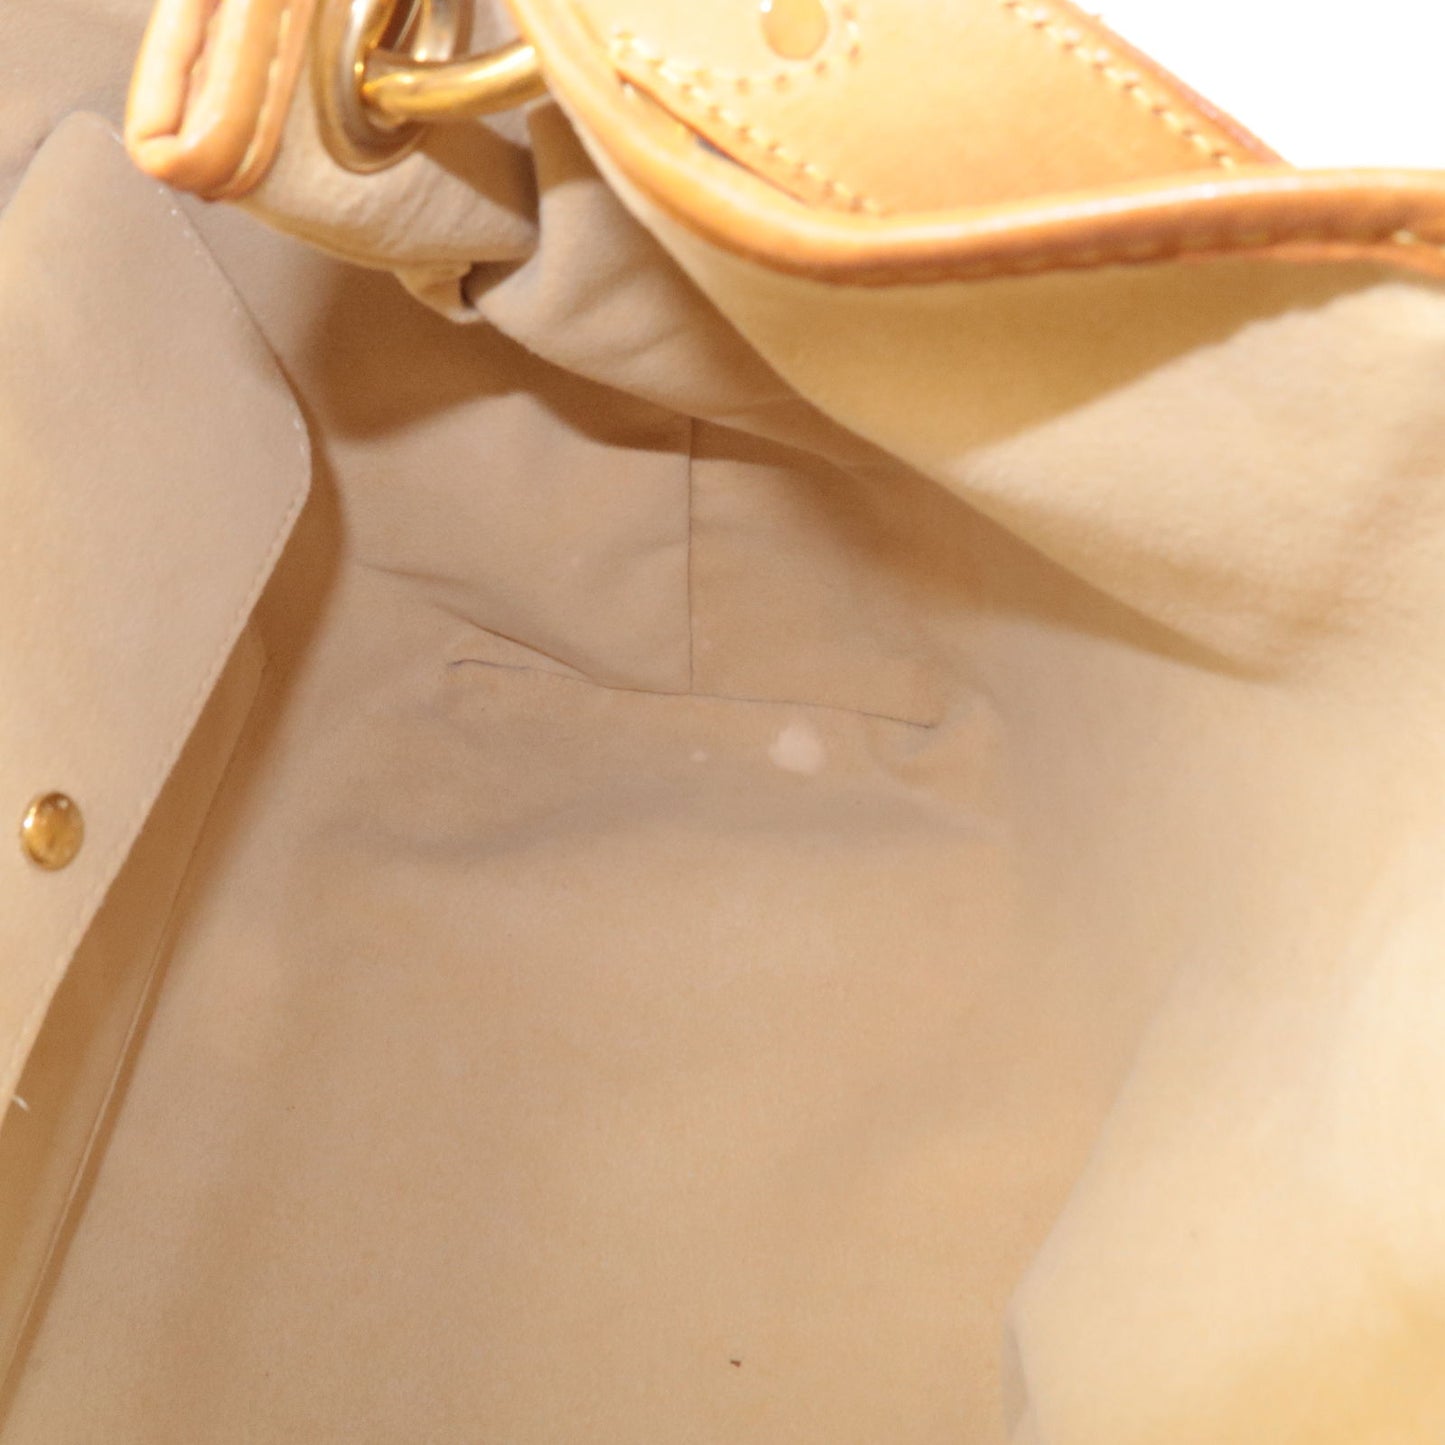 Louis Vuitton Monogram Galliera PM Shoulder Bag Brown M56382